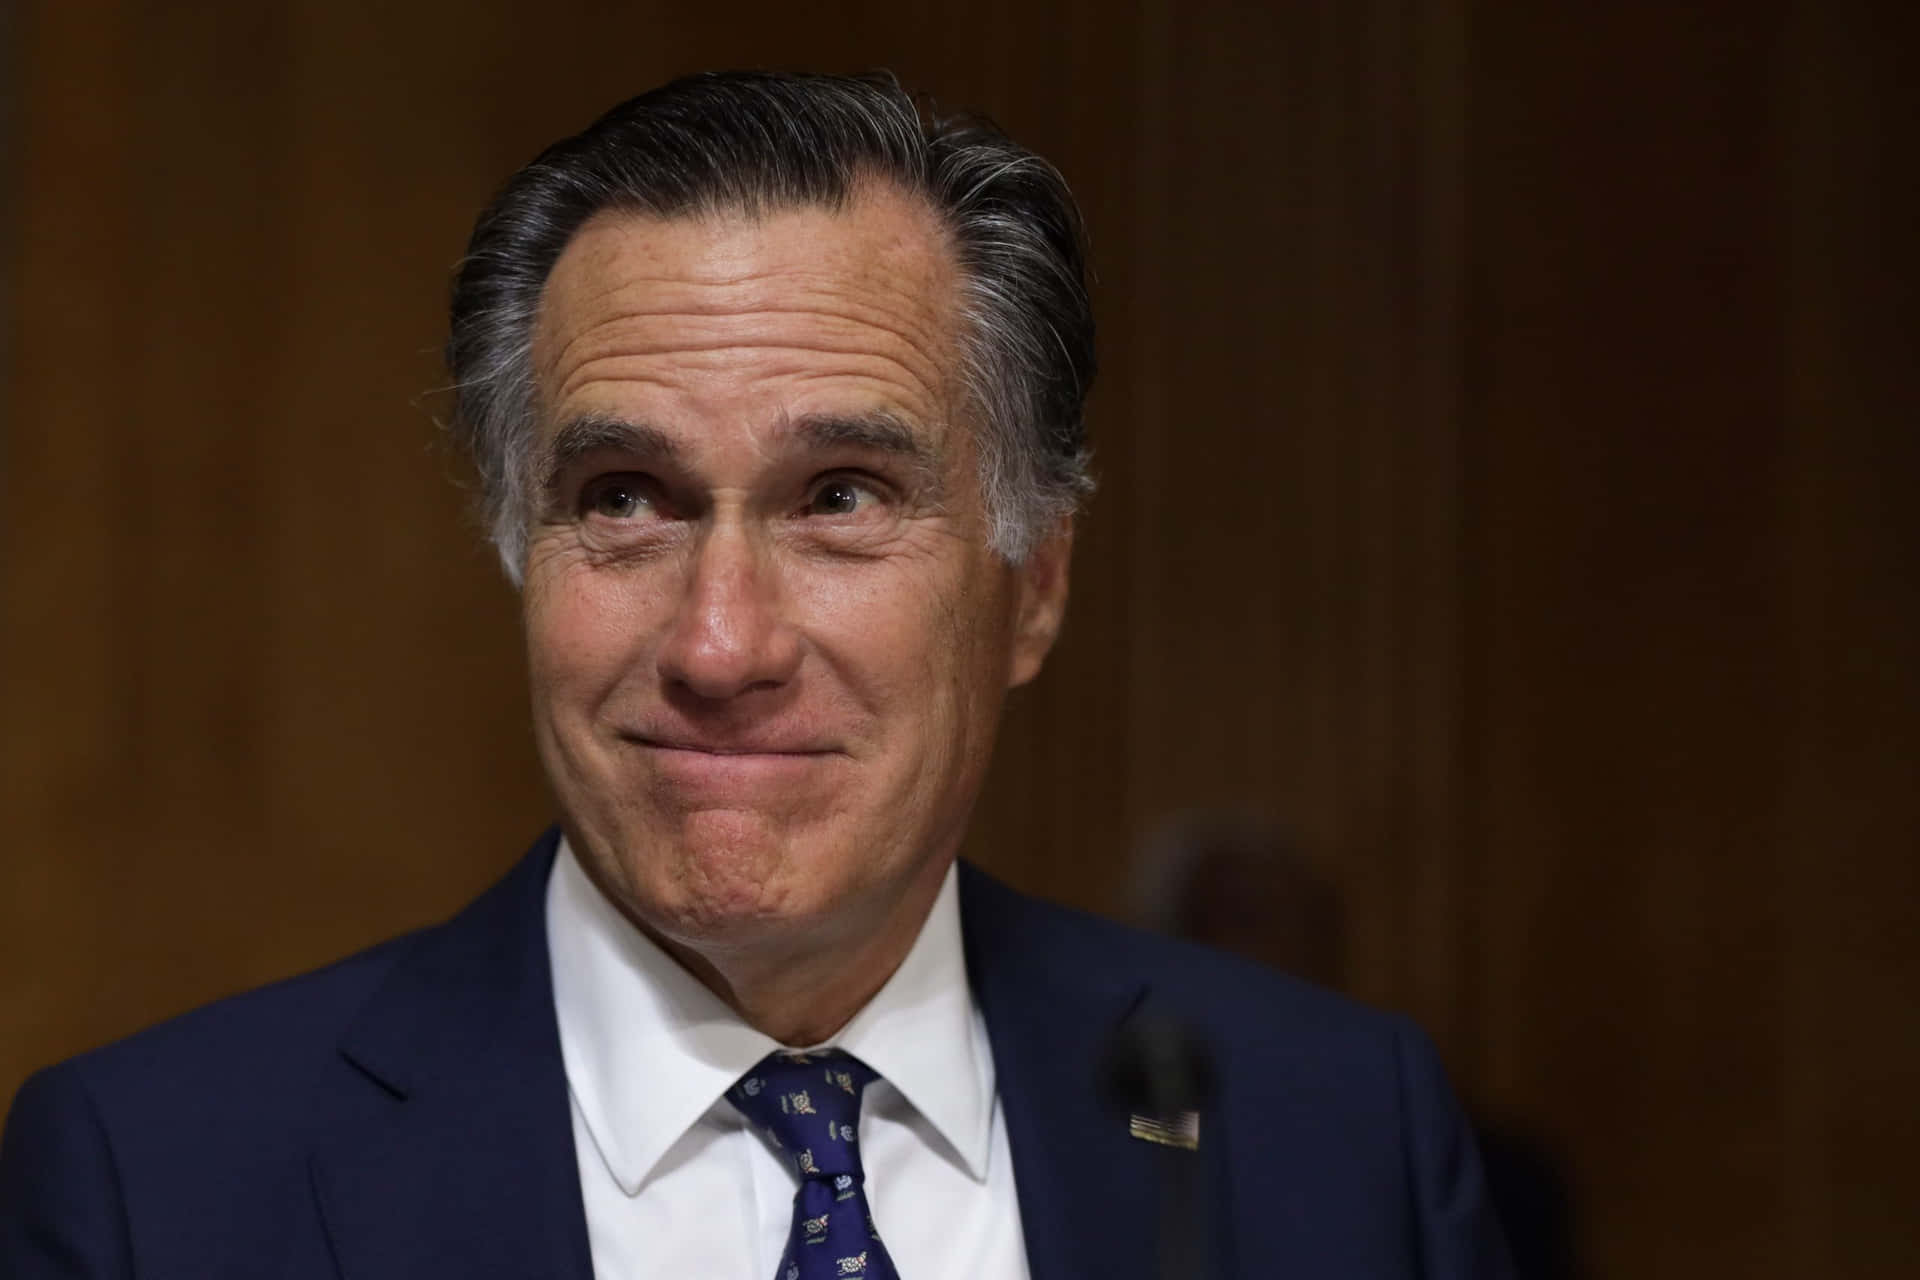 Mitt Romney Smilingin Suit Wallpaper